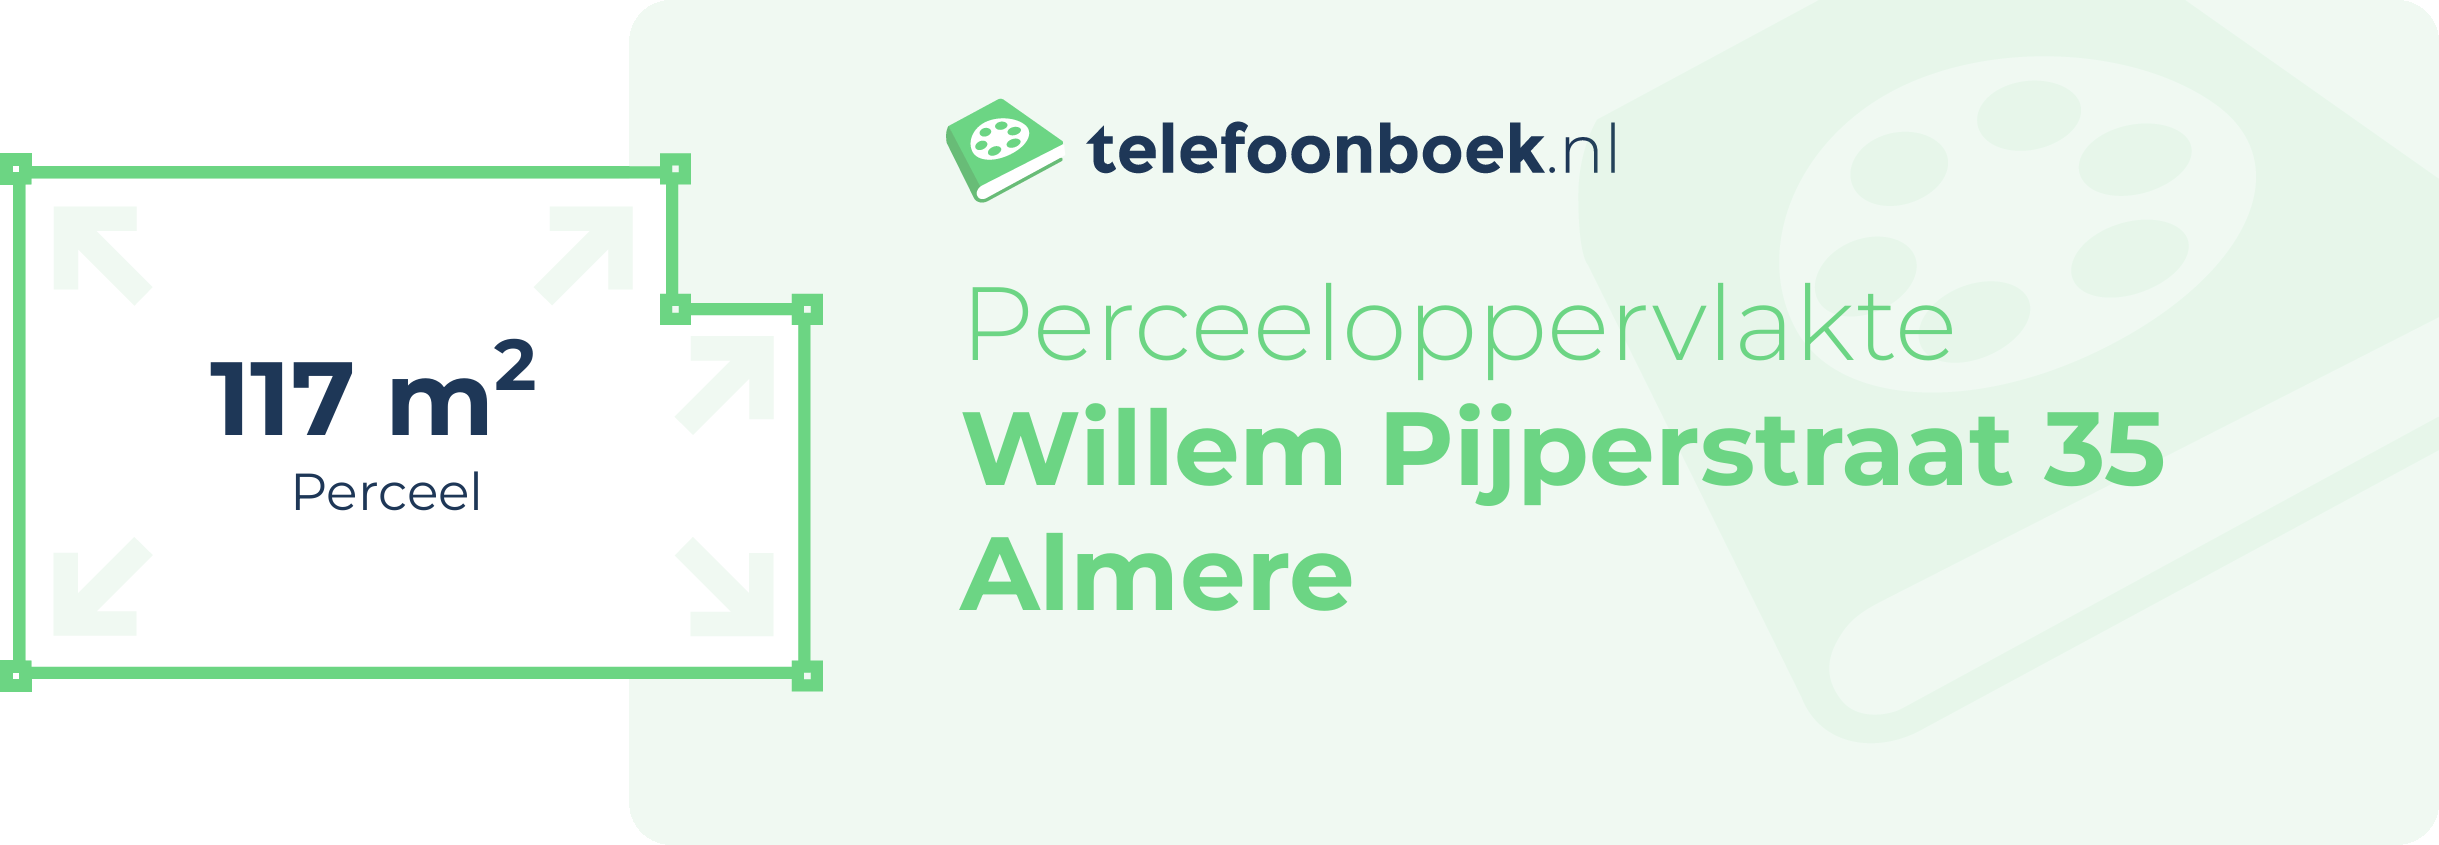 Perceeloppervlakte Willem Pijperstraat 35 Almere